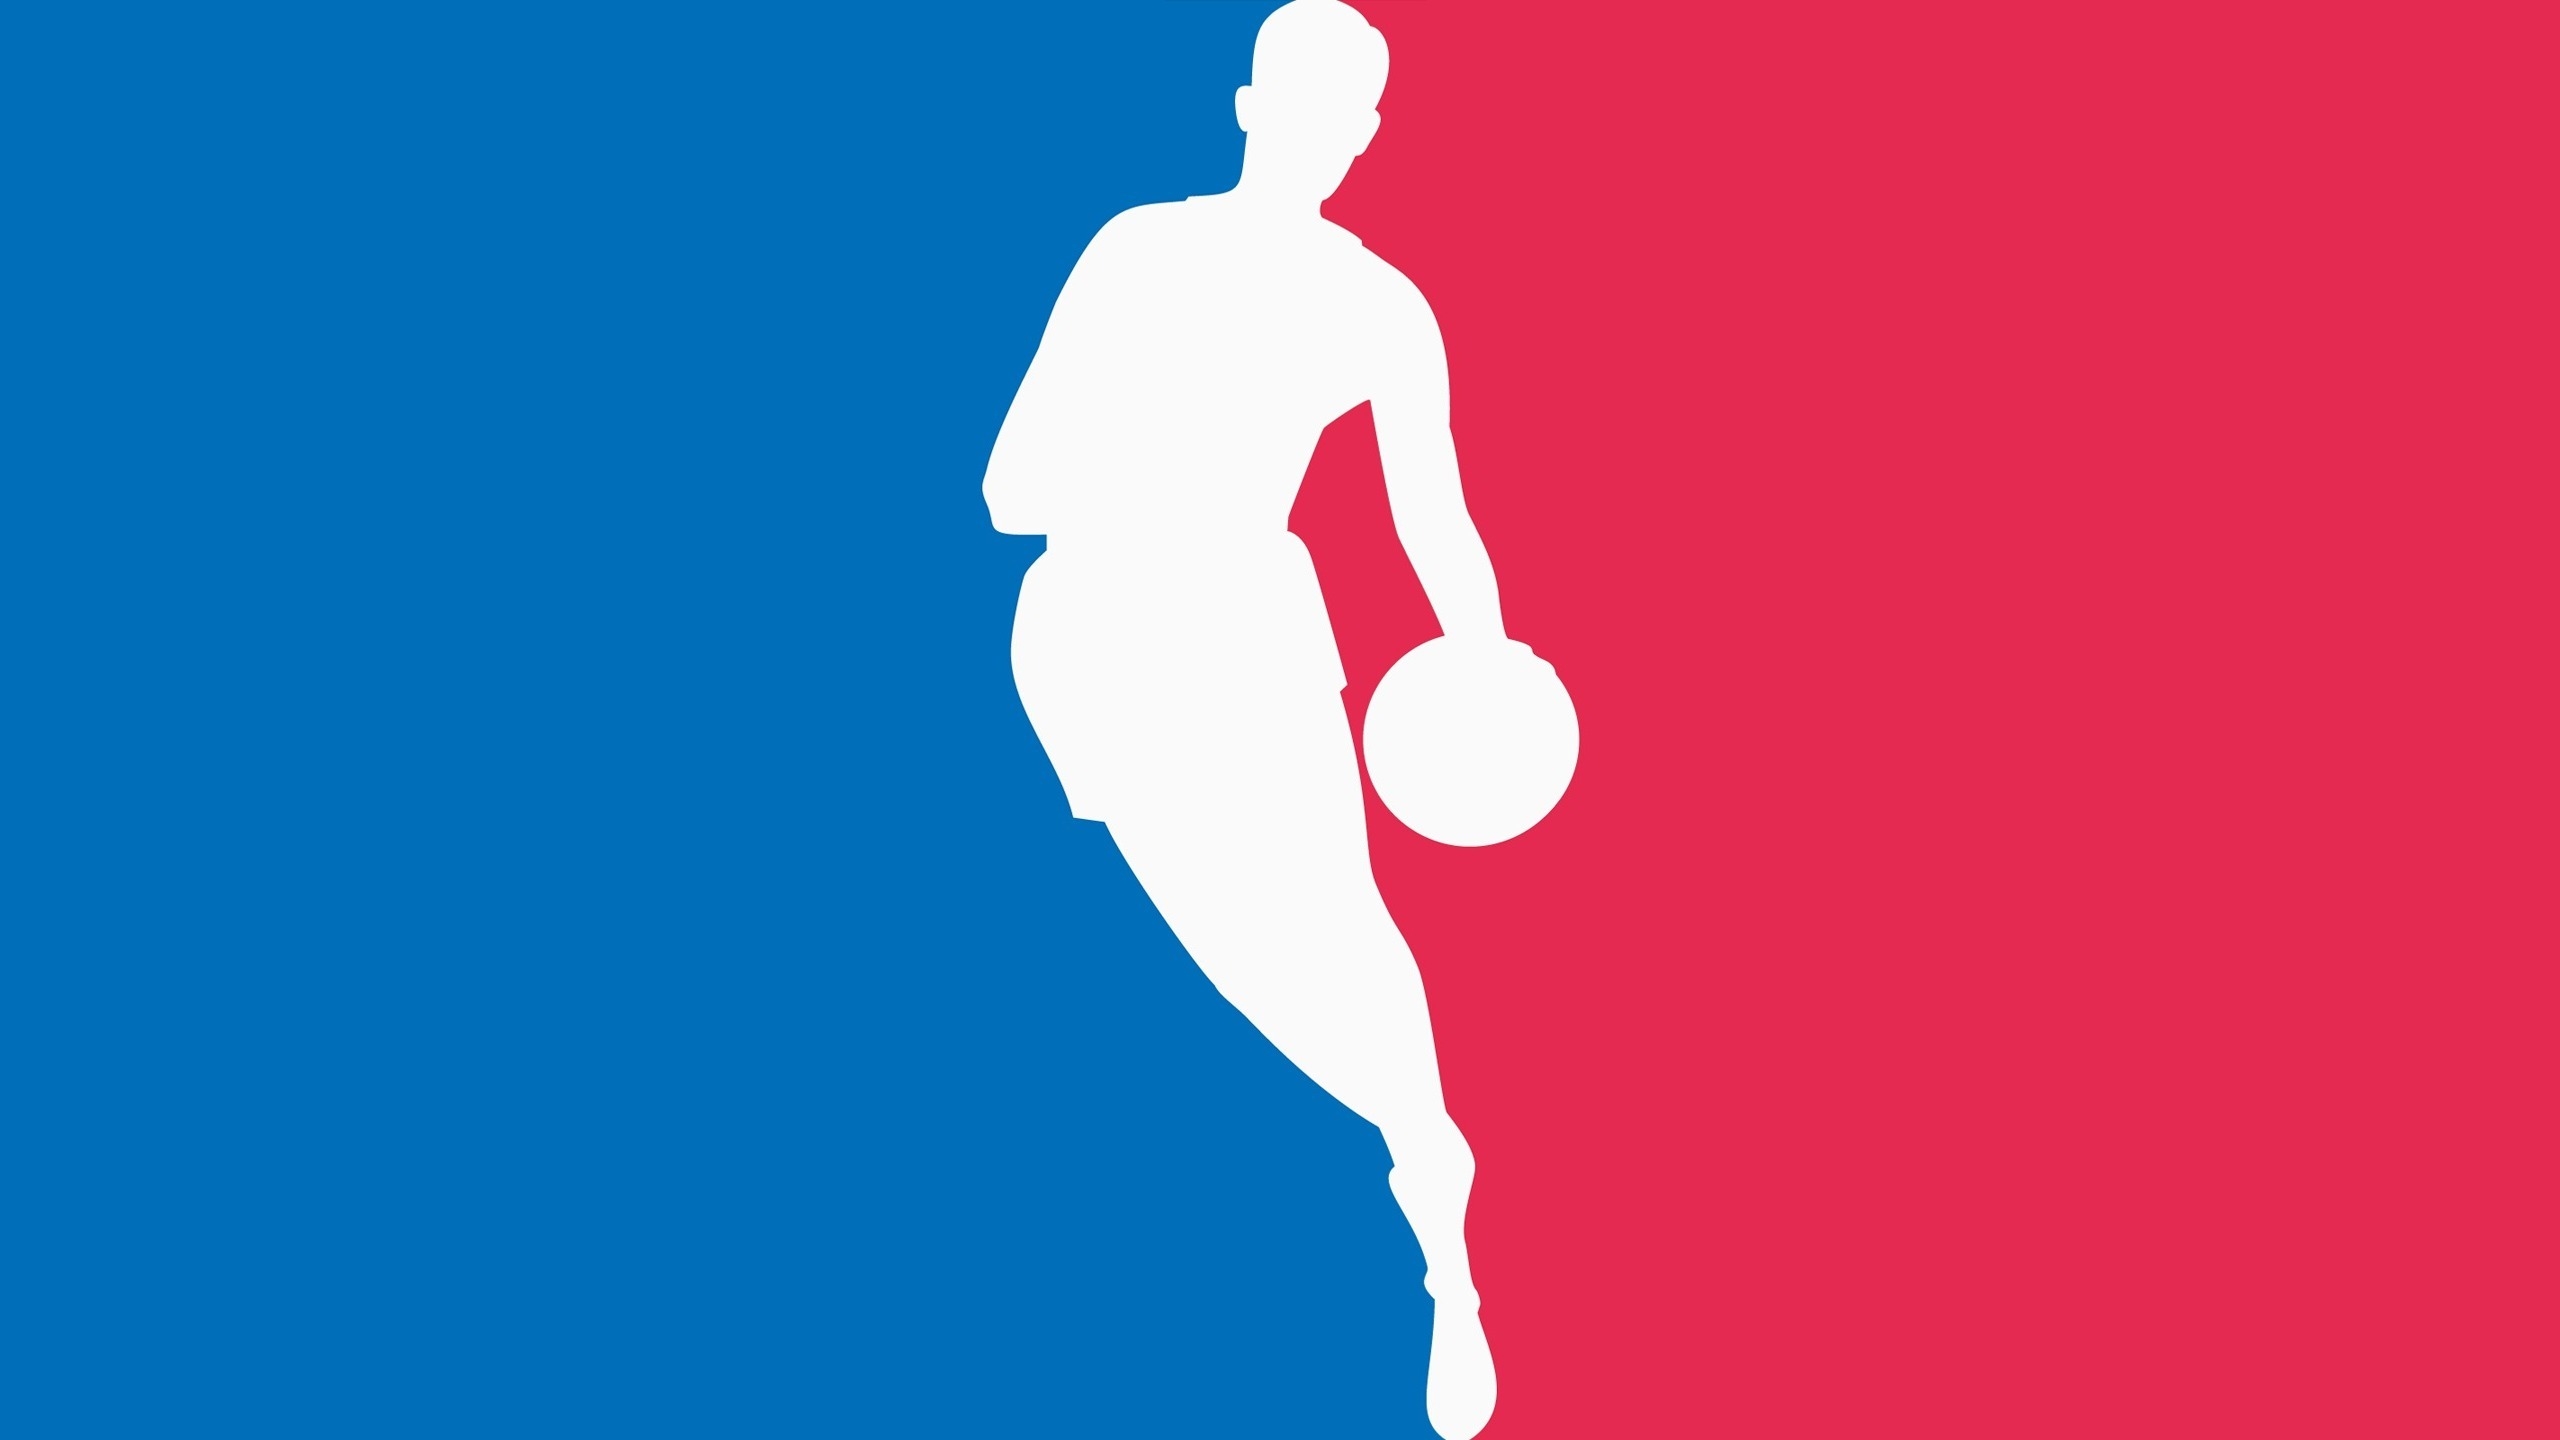 Cool NBA Logo for 2560x1440 HDTV resolution